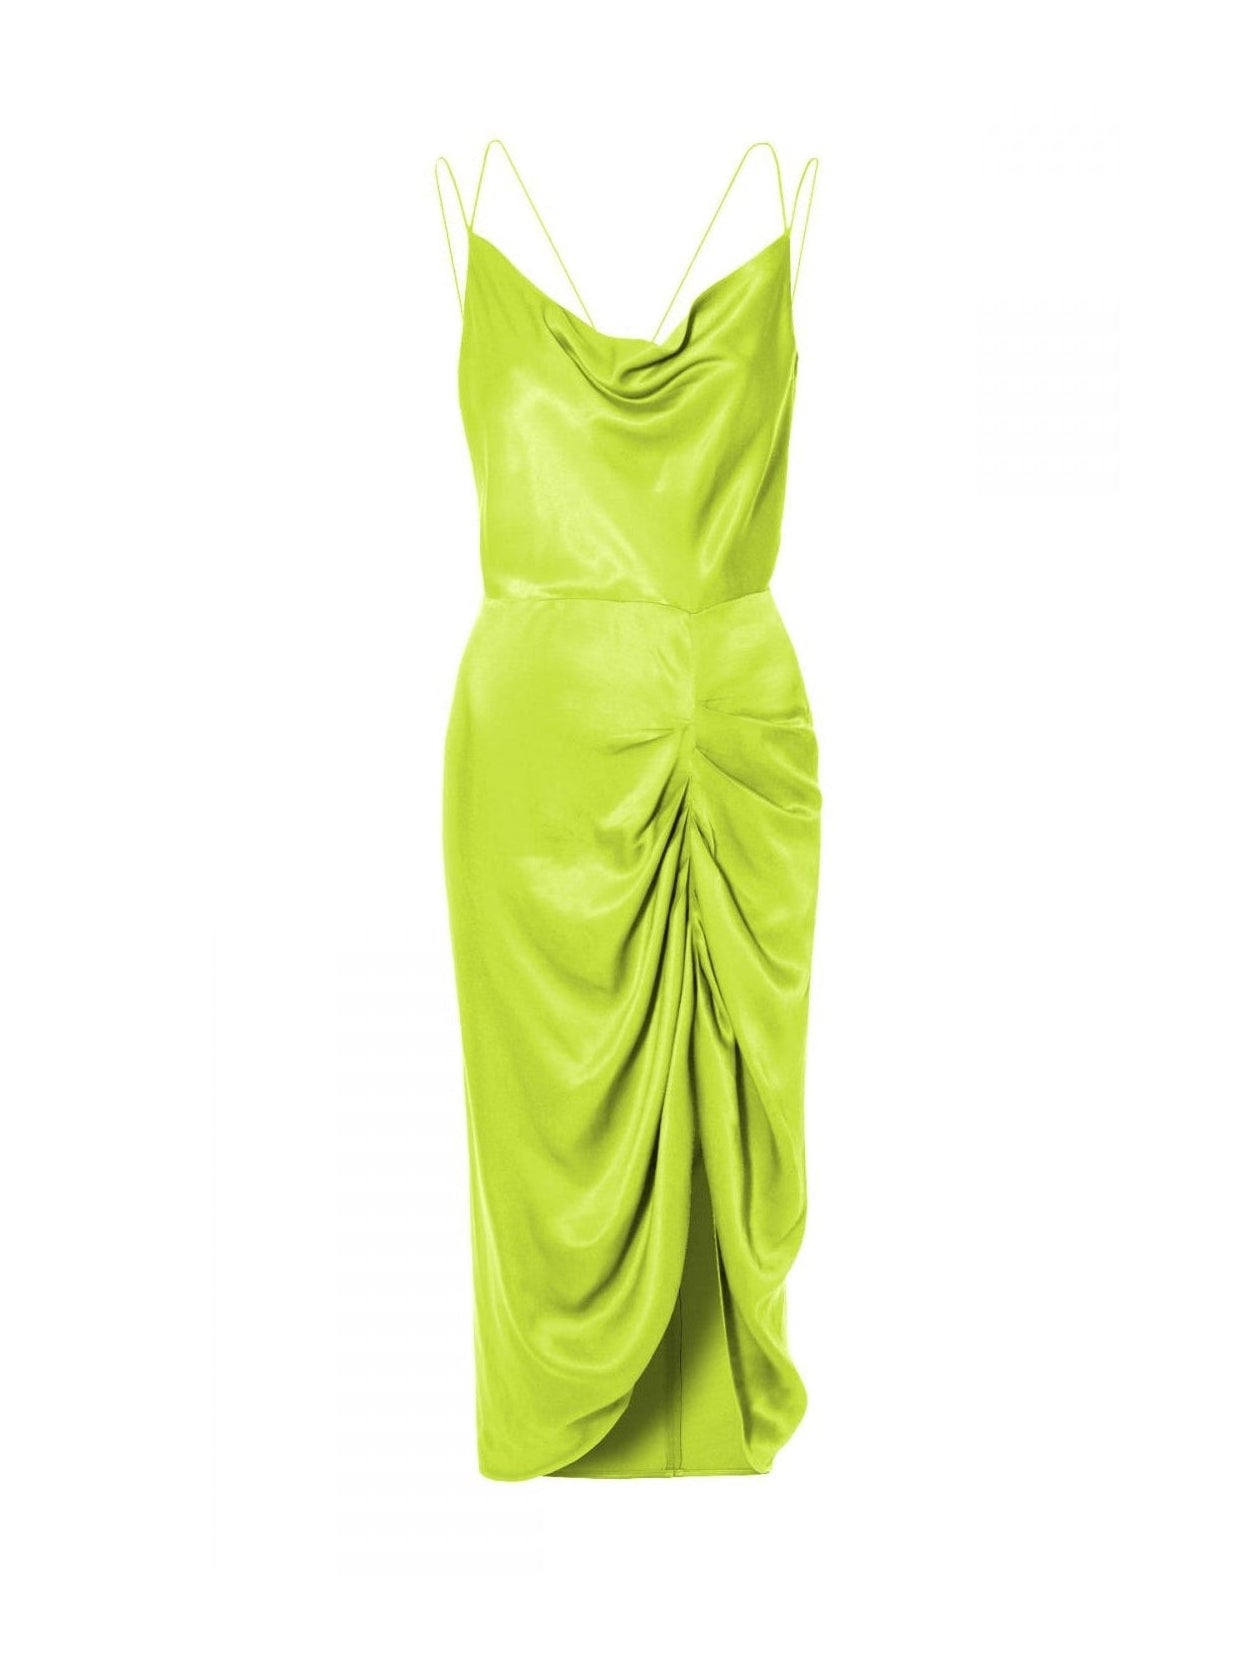 Ava Wild Lime Dress